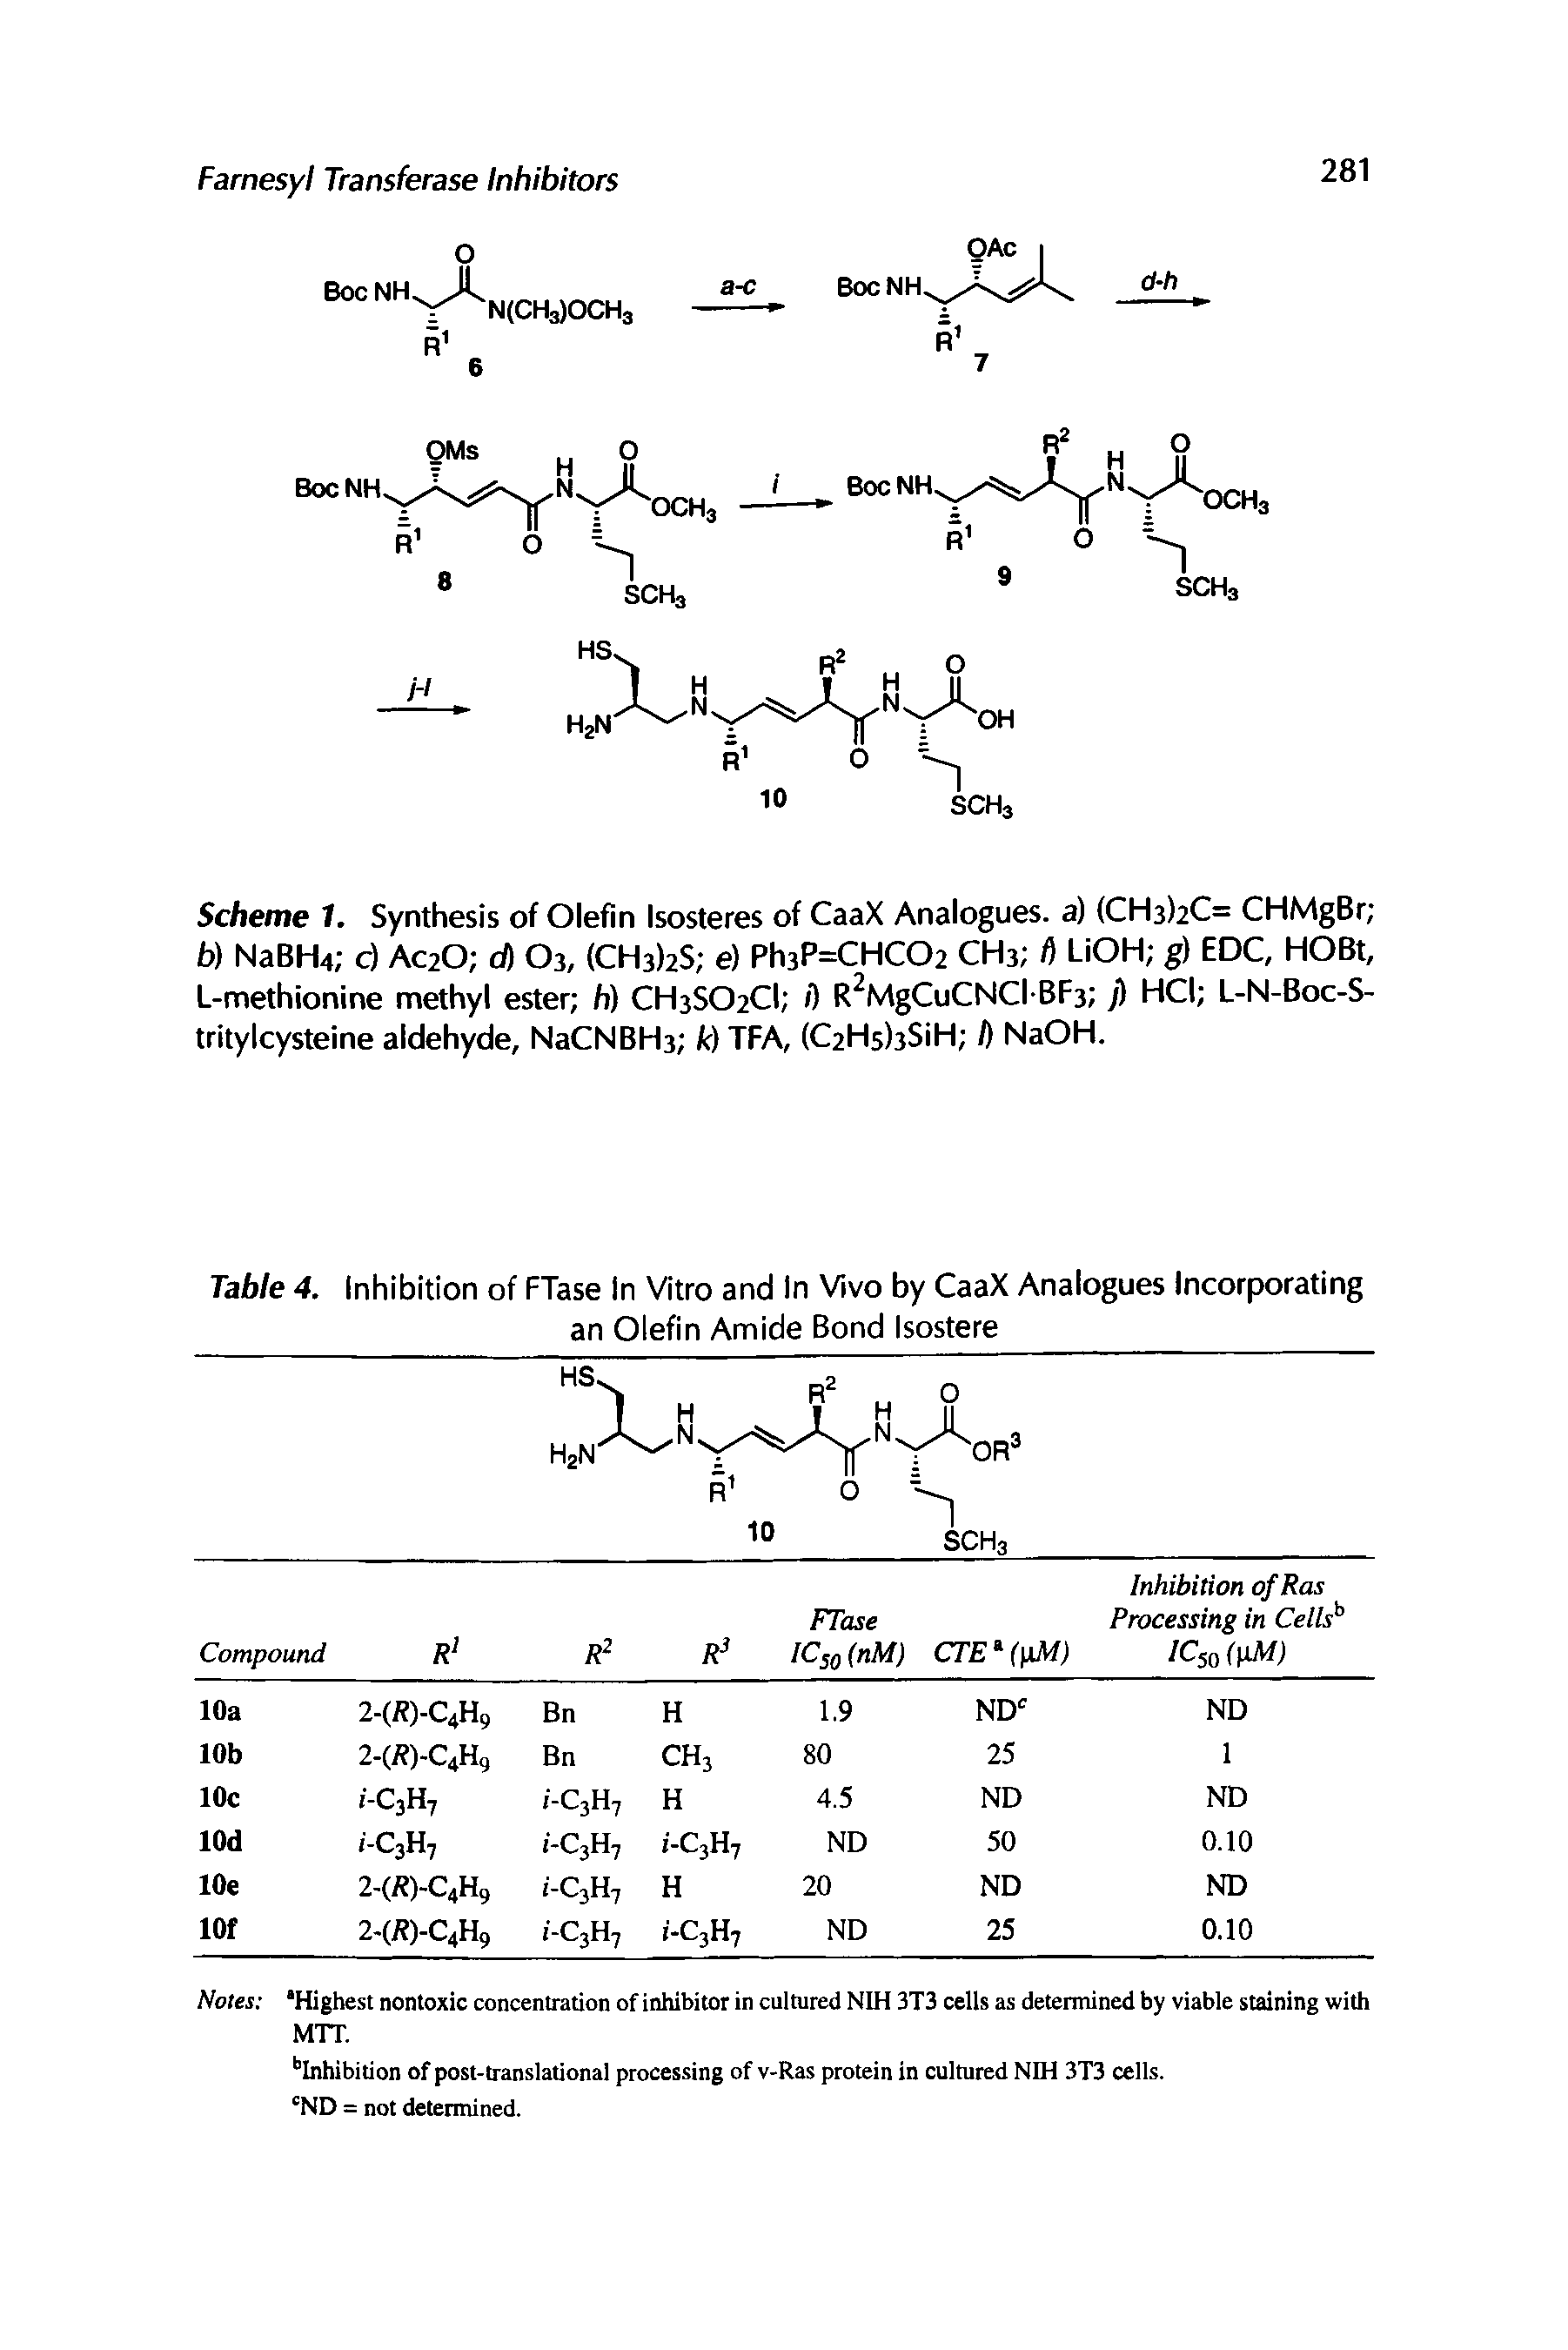 Scheme T. Synthesis of Olefin Isosteres of CaaX Analogues, a) (CH3)2C= CHMgBr b) NaBH4 c) Ac20 d) O3, (CH3)2S e) Ph3P=CHC02 CH3 fl LiOH g) EDC, HOBt, L-methionine methyl ester h) CH3S02Cl /) R2MgCuCNCI-BF3 j) HCI L-N-Boc-S-tritylcysteine aldehyde, NaCNBH3 k) TFA, (QHshSiH I) NaOH.